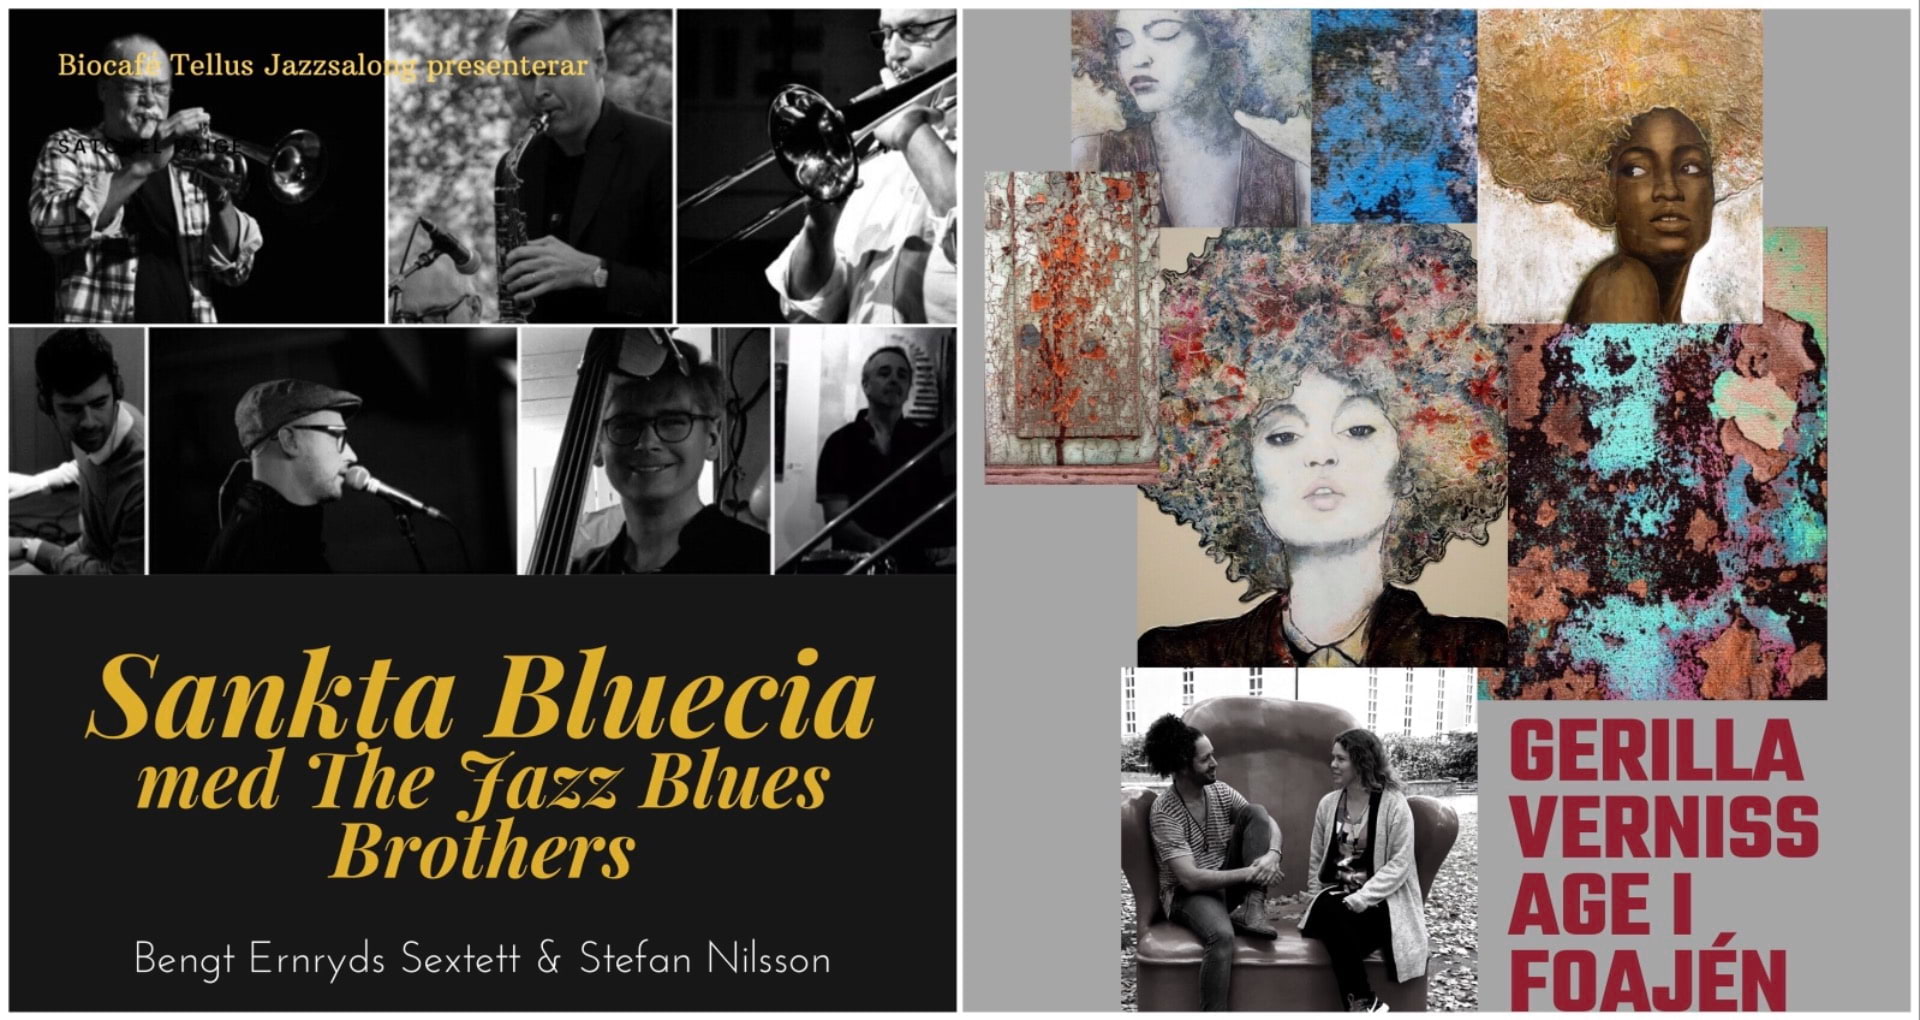 Sankta Bluecia med the jazz blues brothers & gerillavernissage